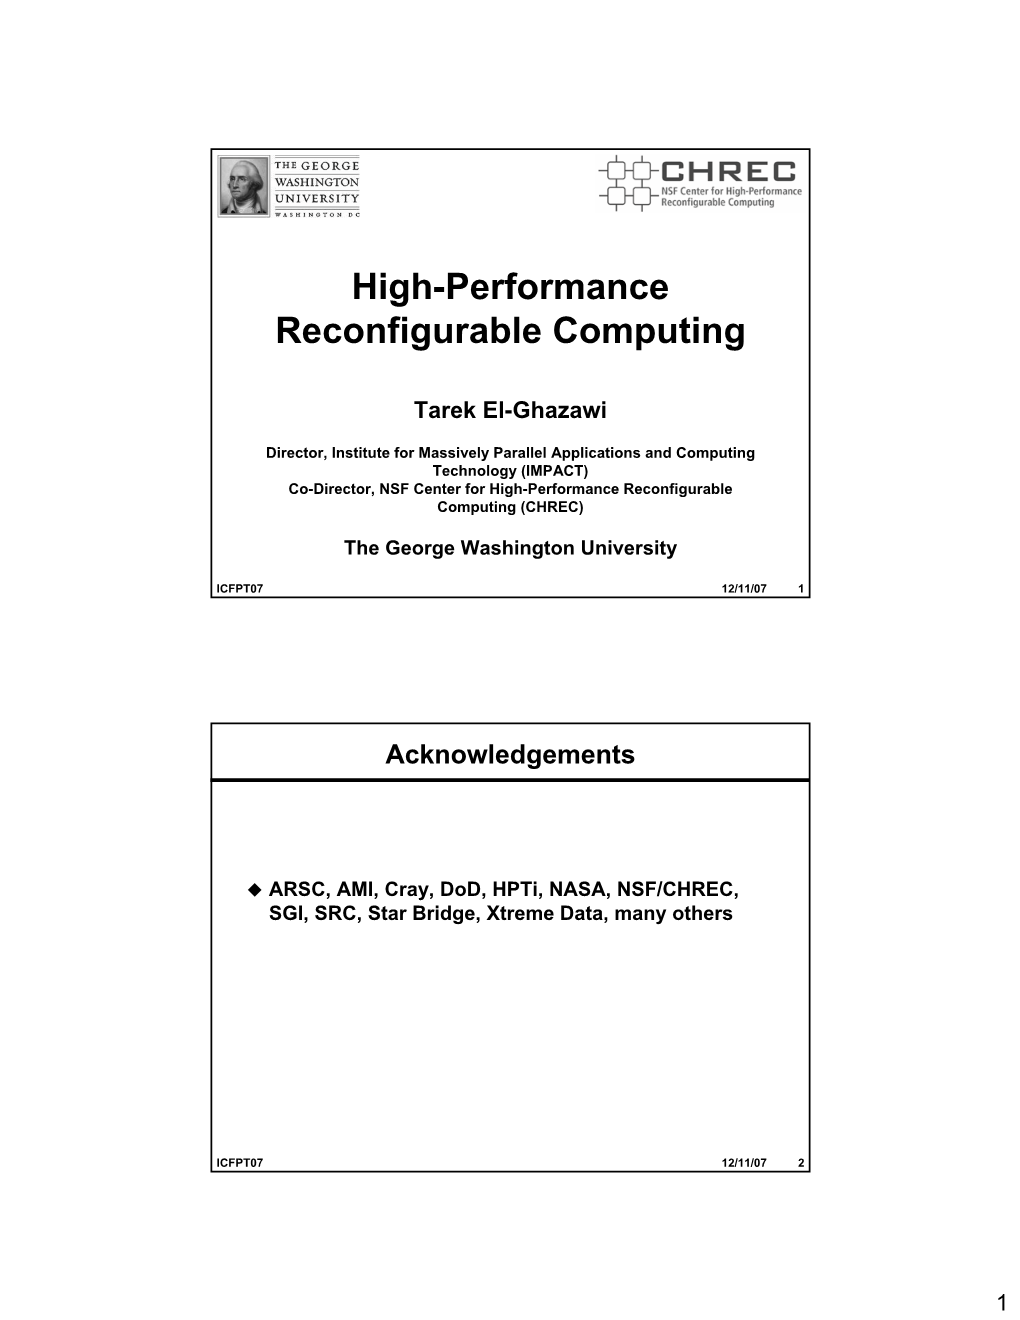 High-Performance Reconfigurable Computing